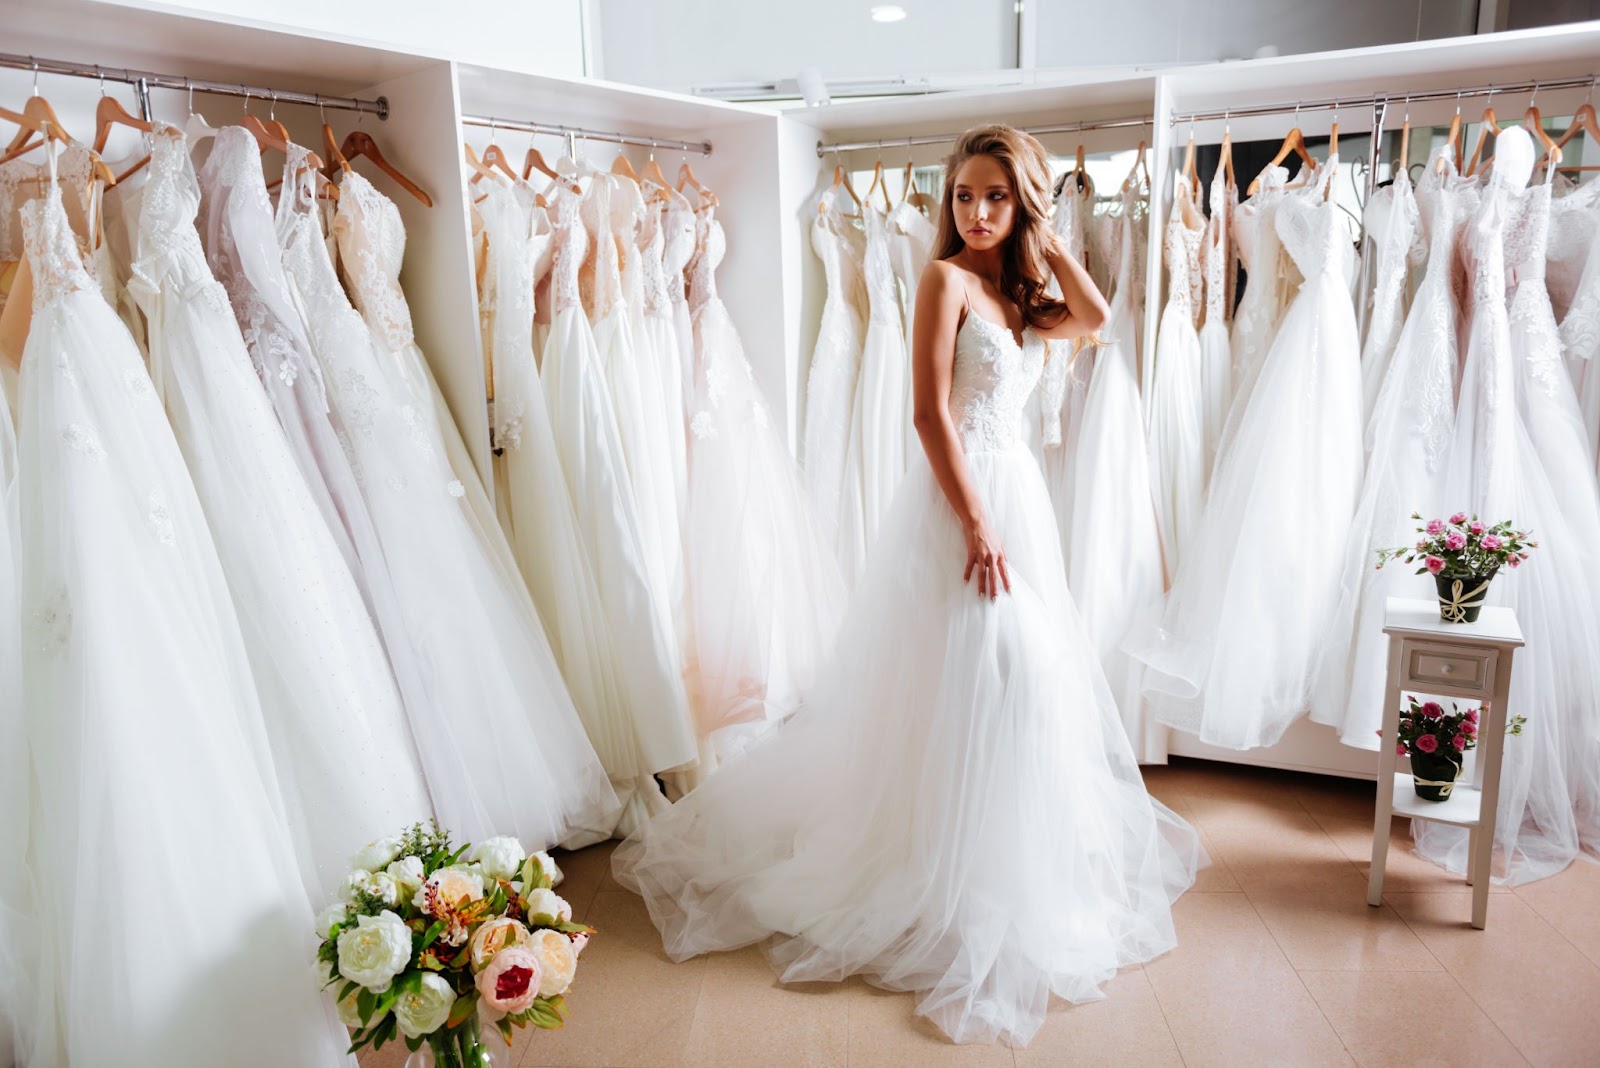 Find Your Style: 4 Popular Wedding Dress Fabrics